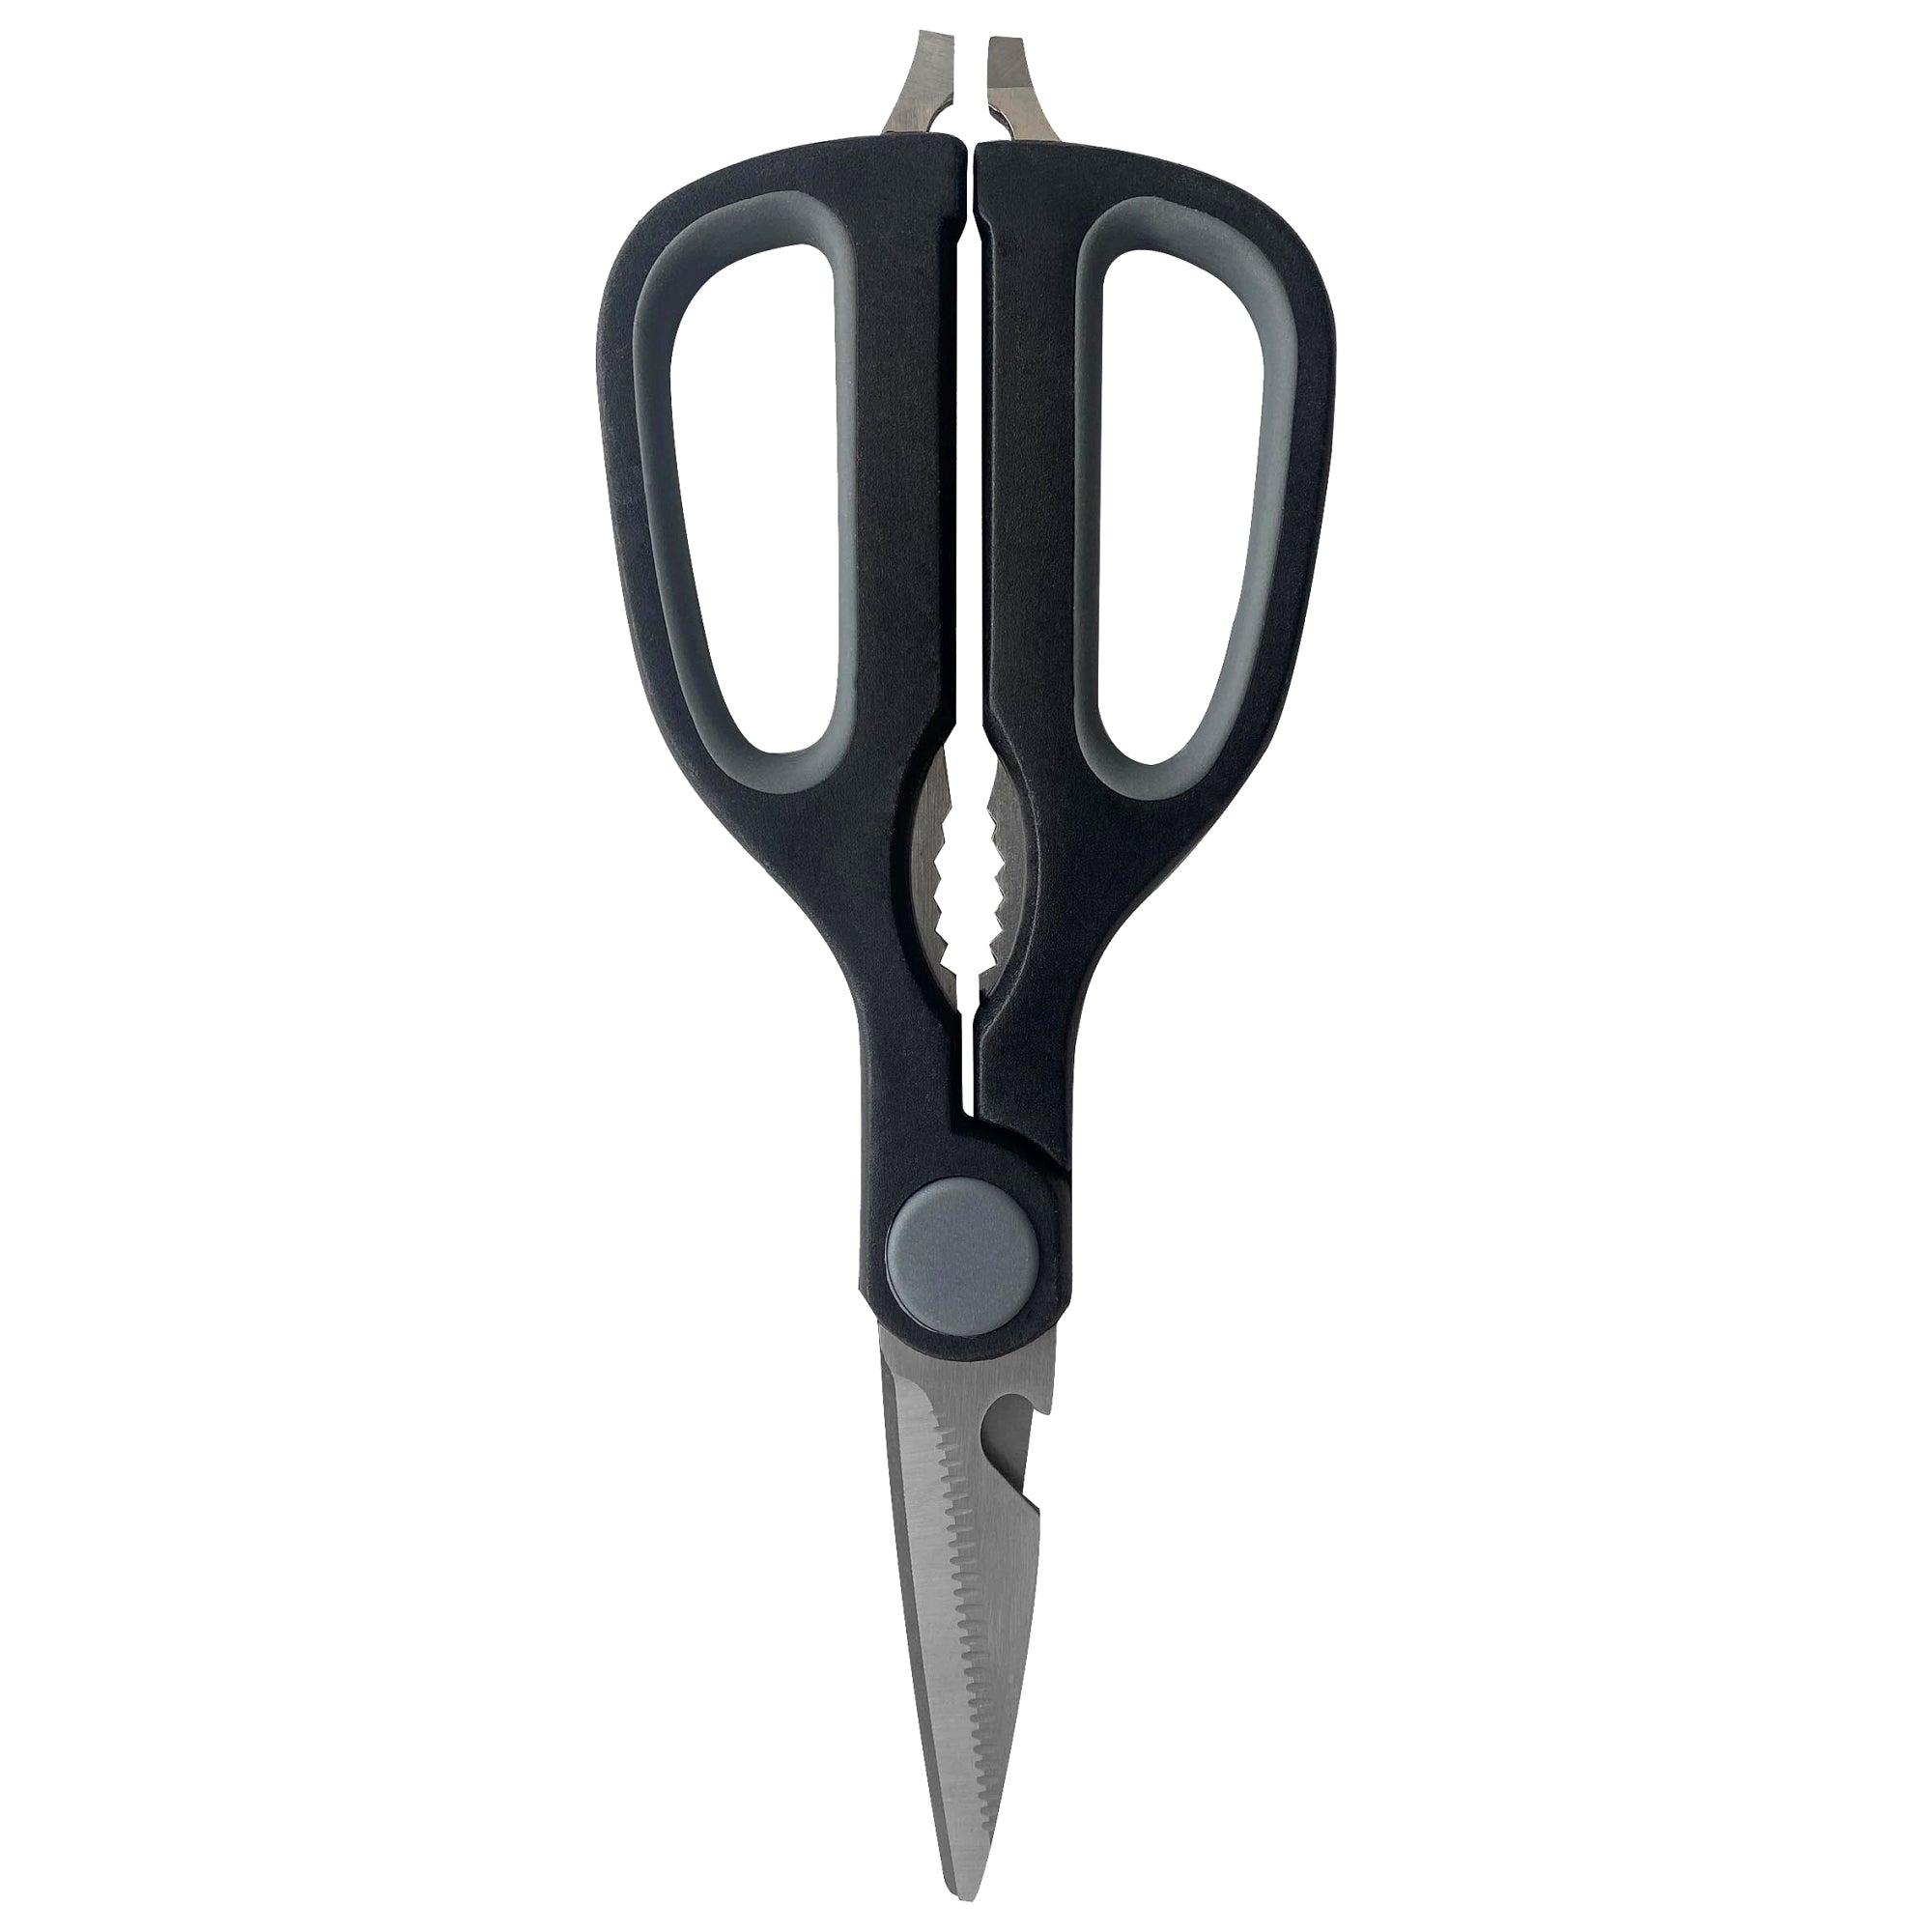 Schere multifunctional kitchen scissors